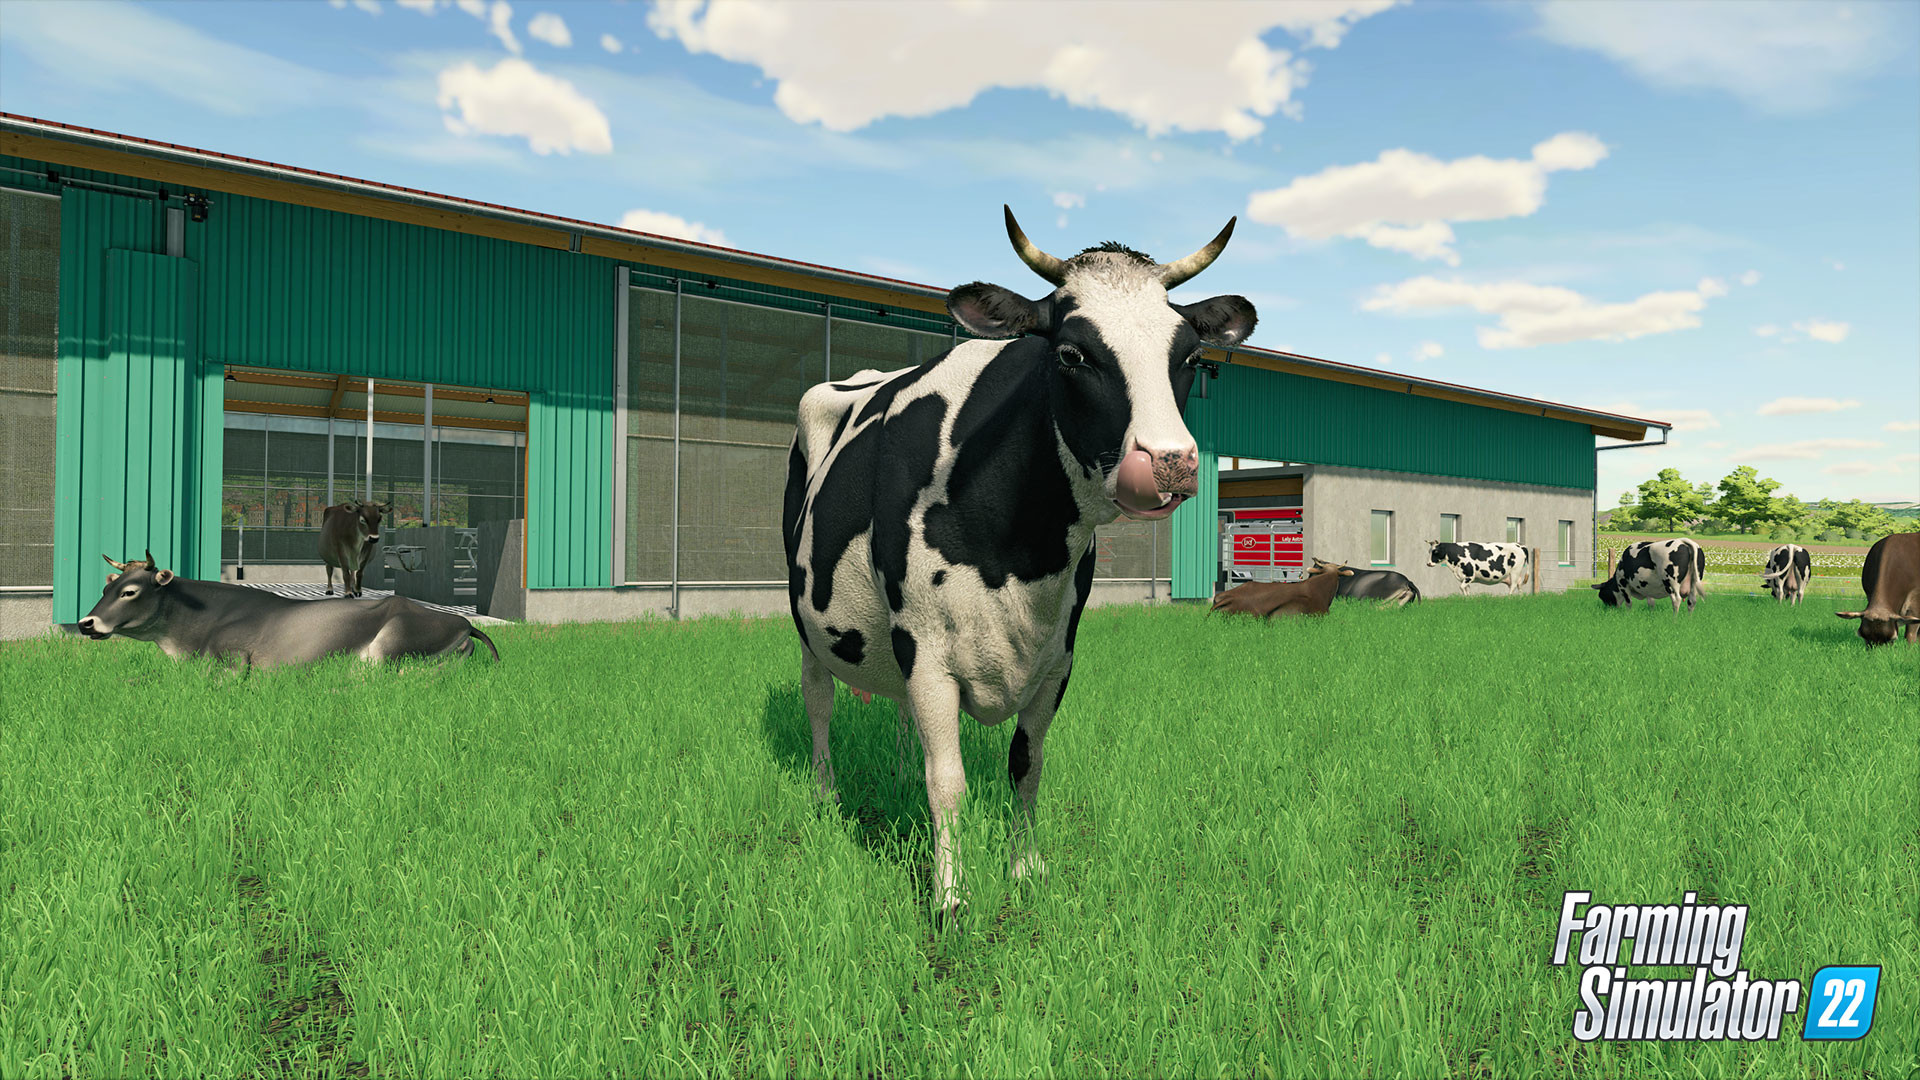 Farming simulator 22 - Kráva